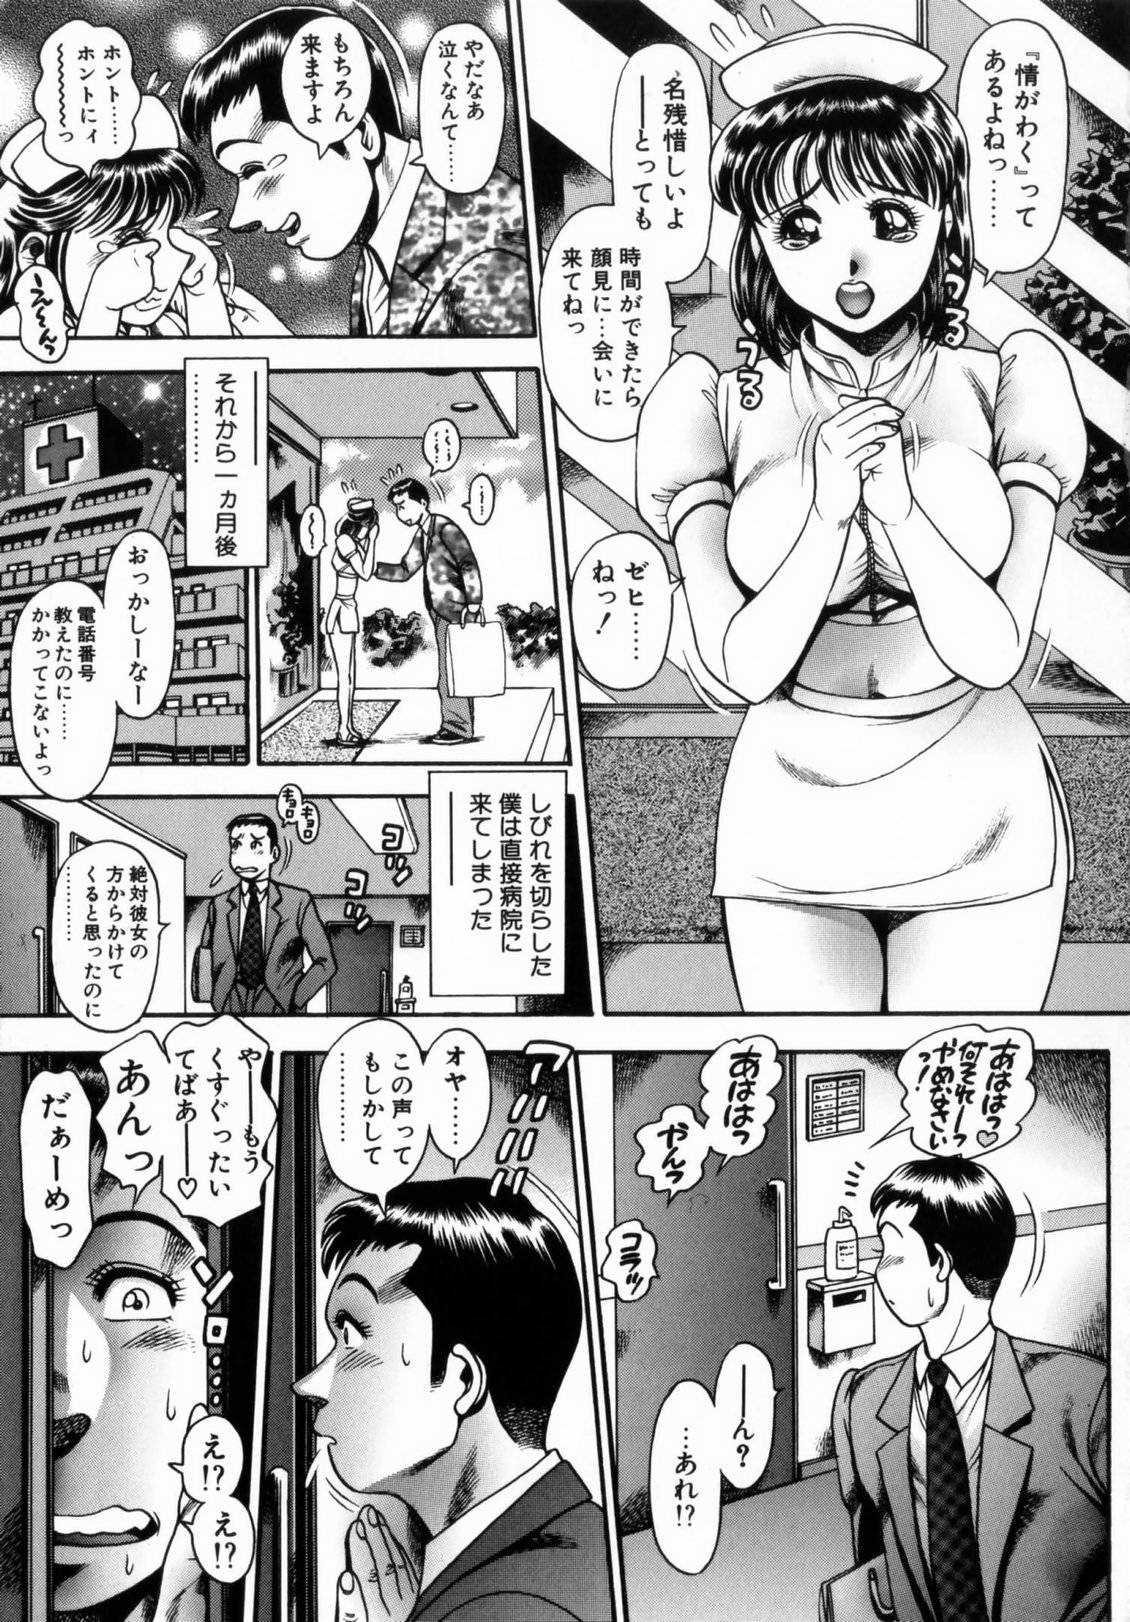 [Chatarou] Koisuru Race Queen [ちゃたろー] 恋するレースクイーン